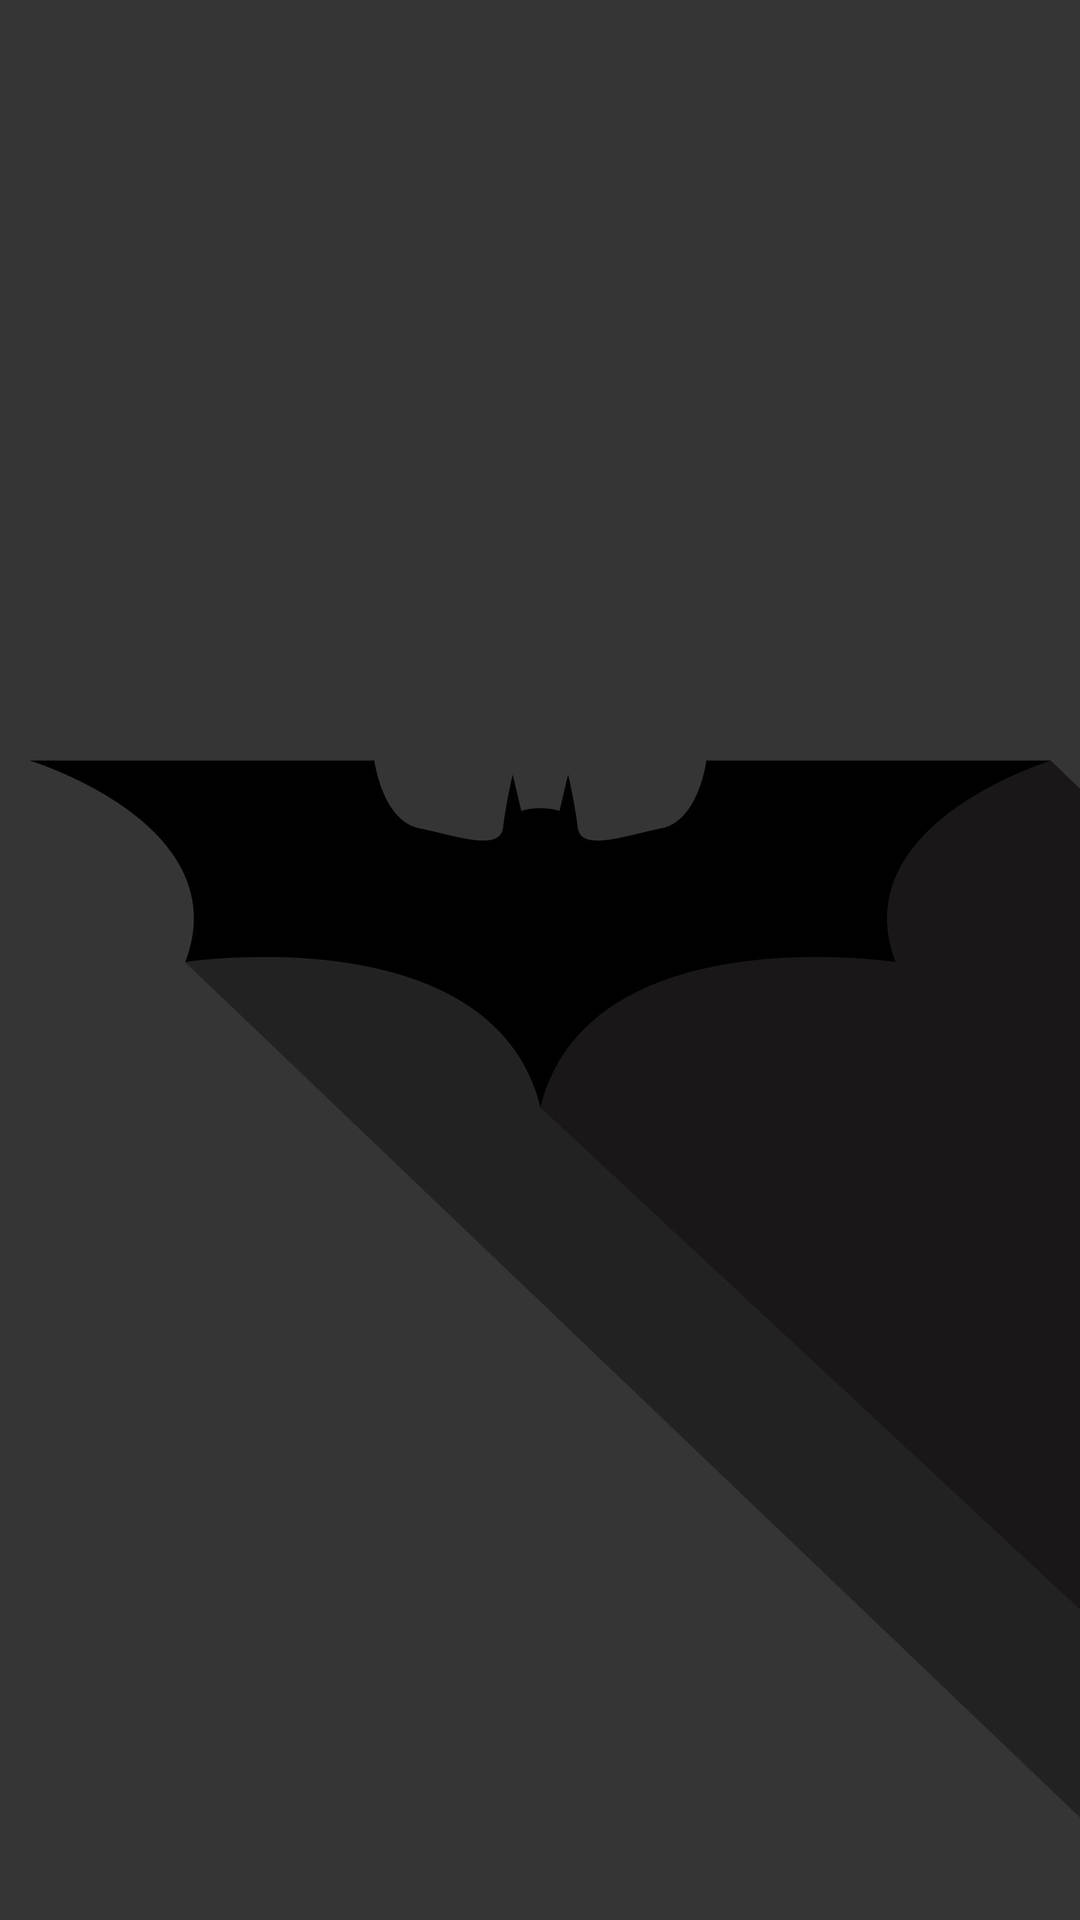 Shadowed Batman Logo iPhone Wallpaper